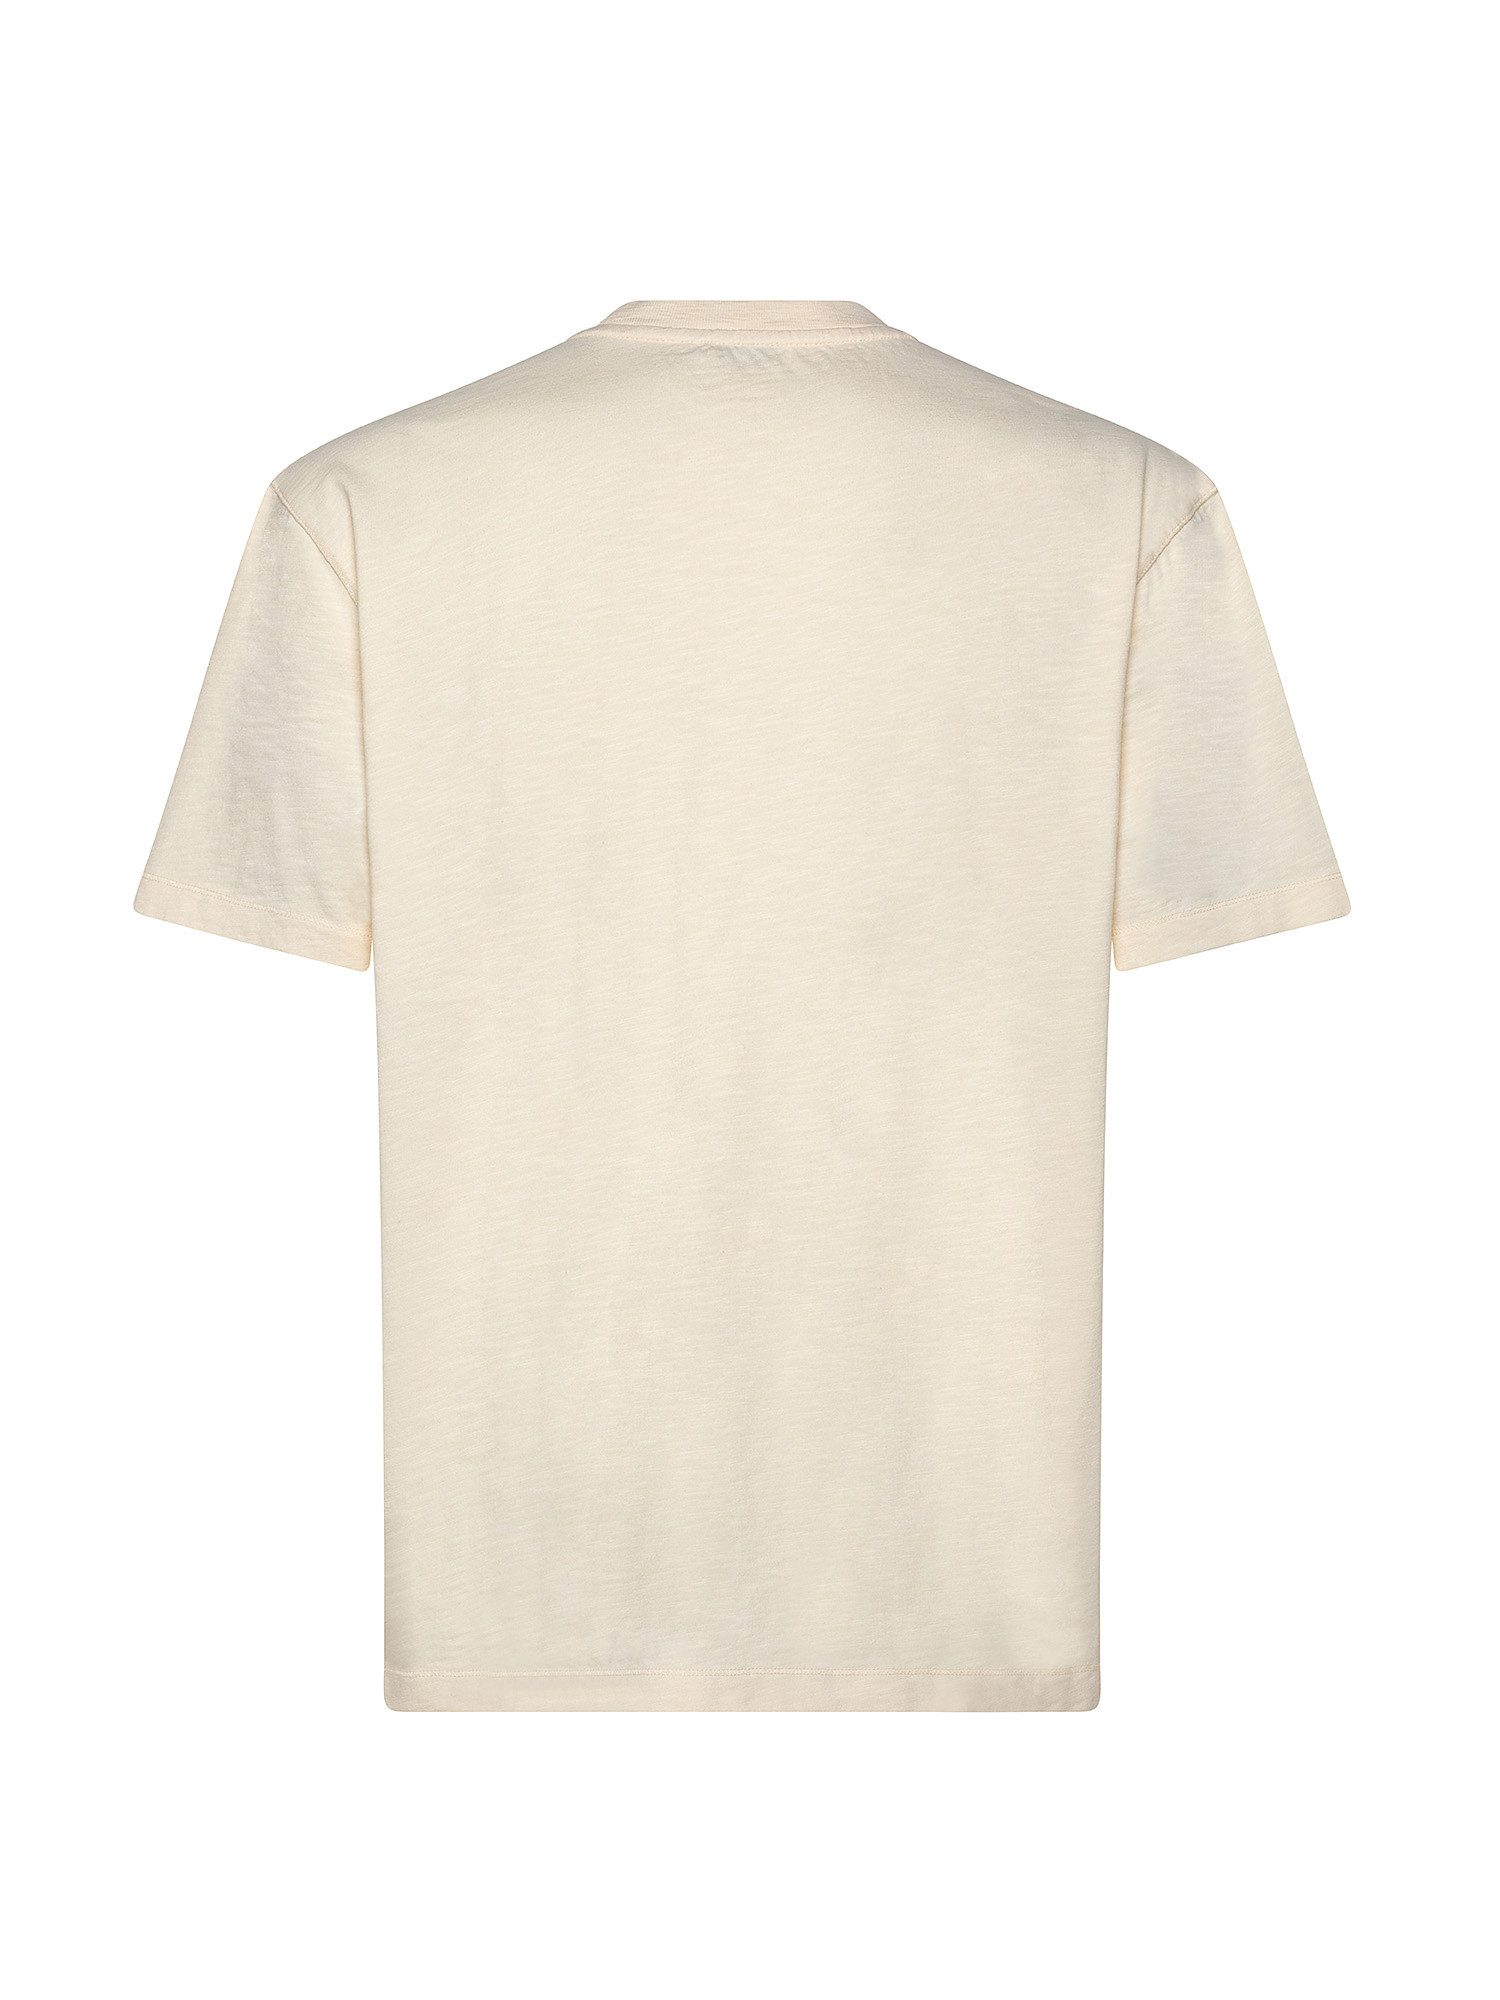 T-Shirt morbida, Bianco panna, large image number 1